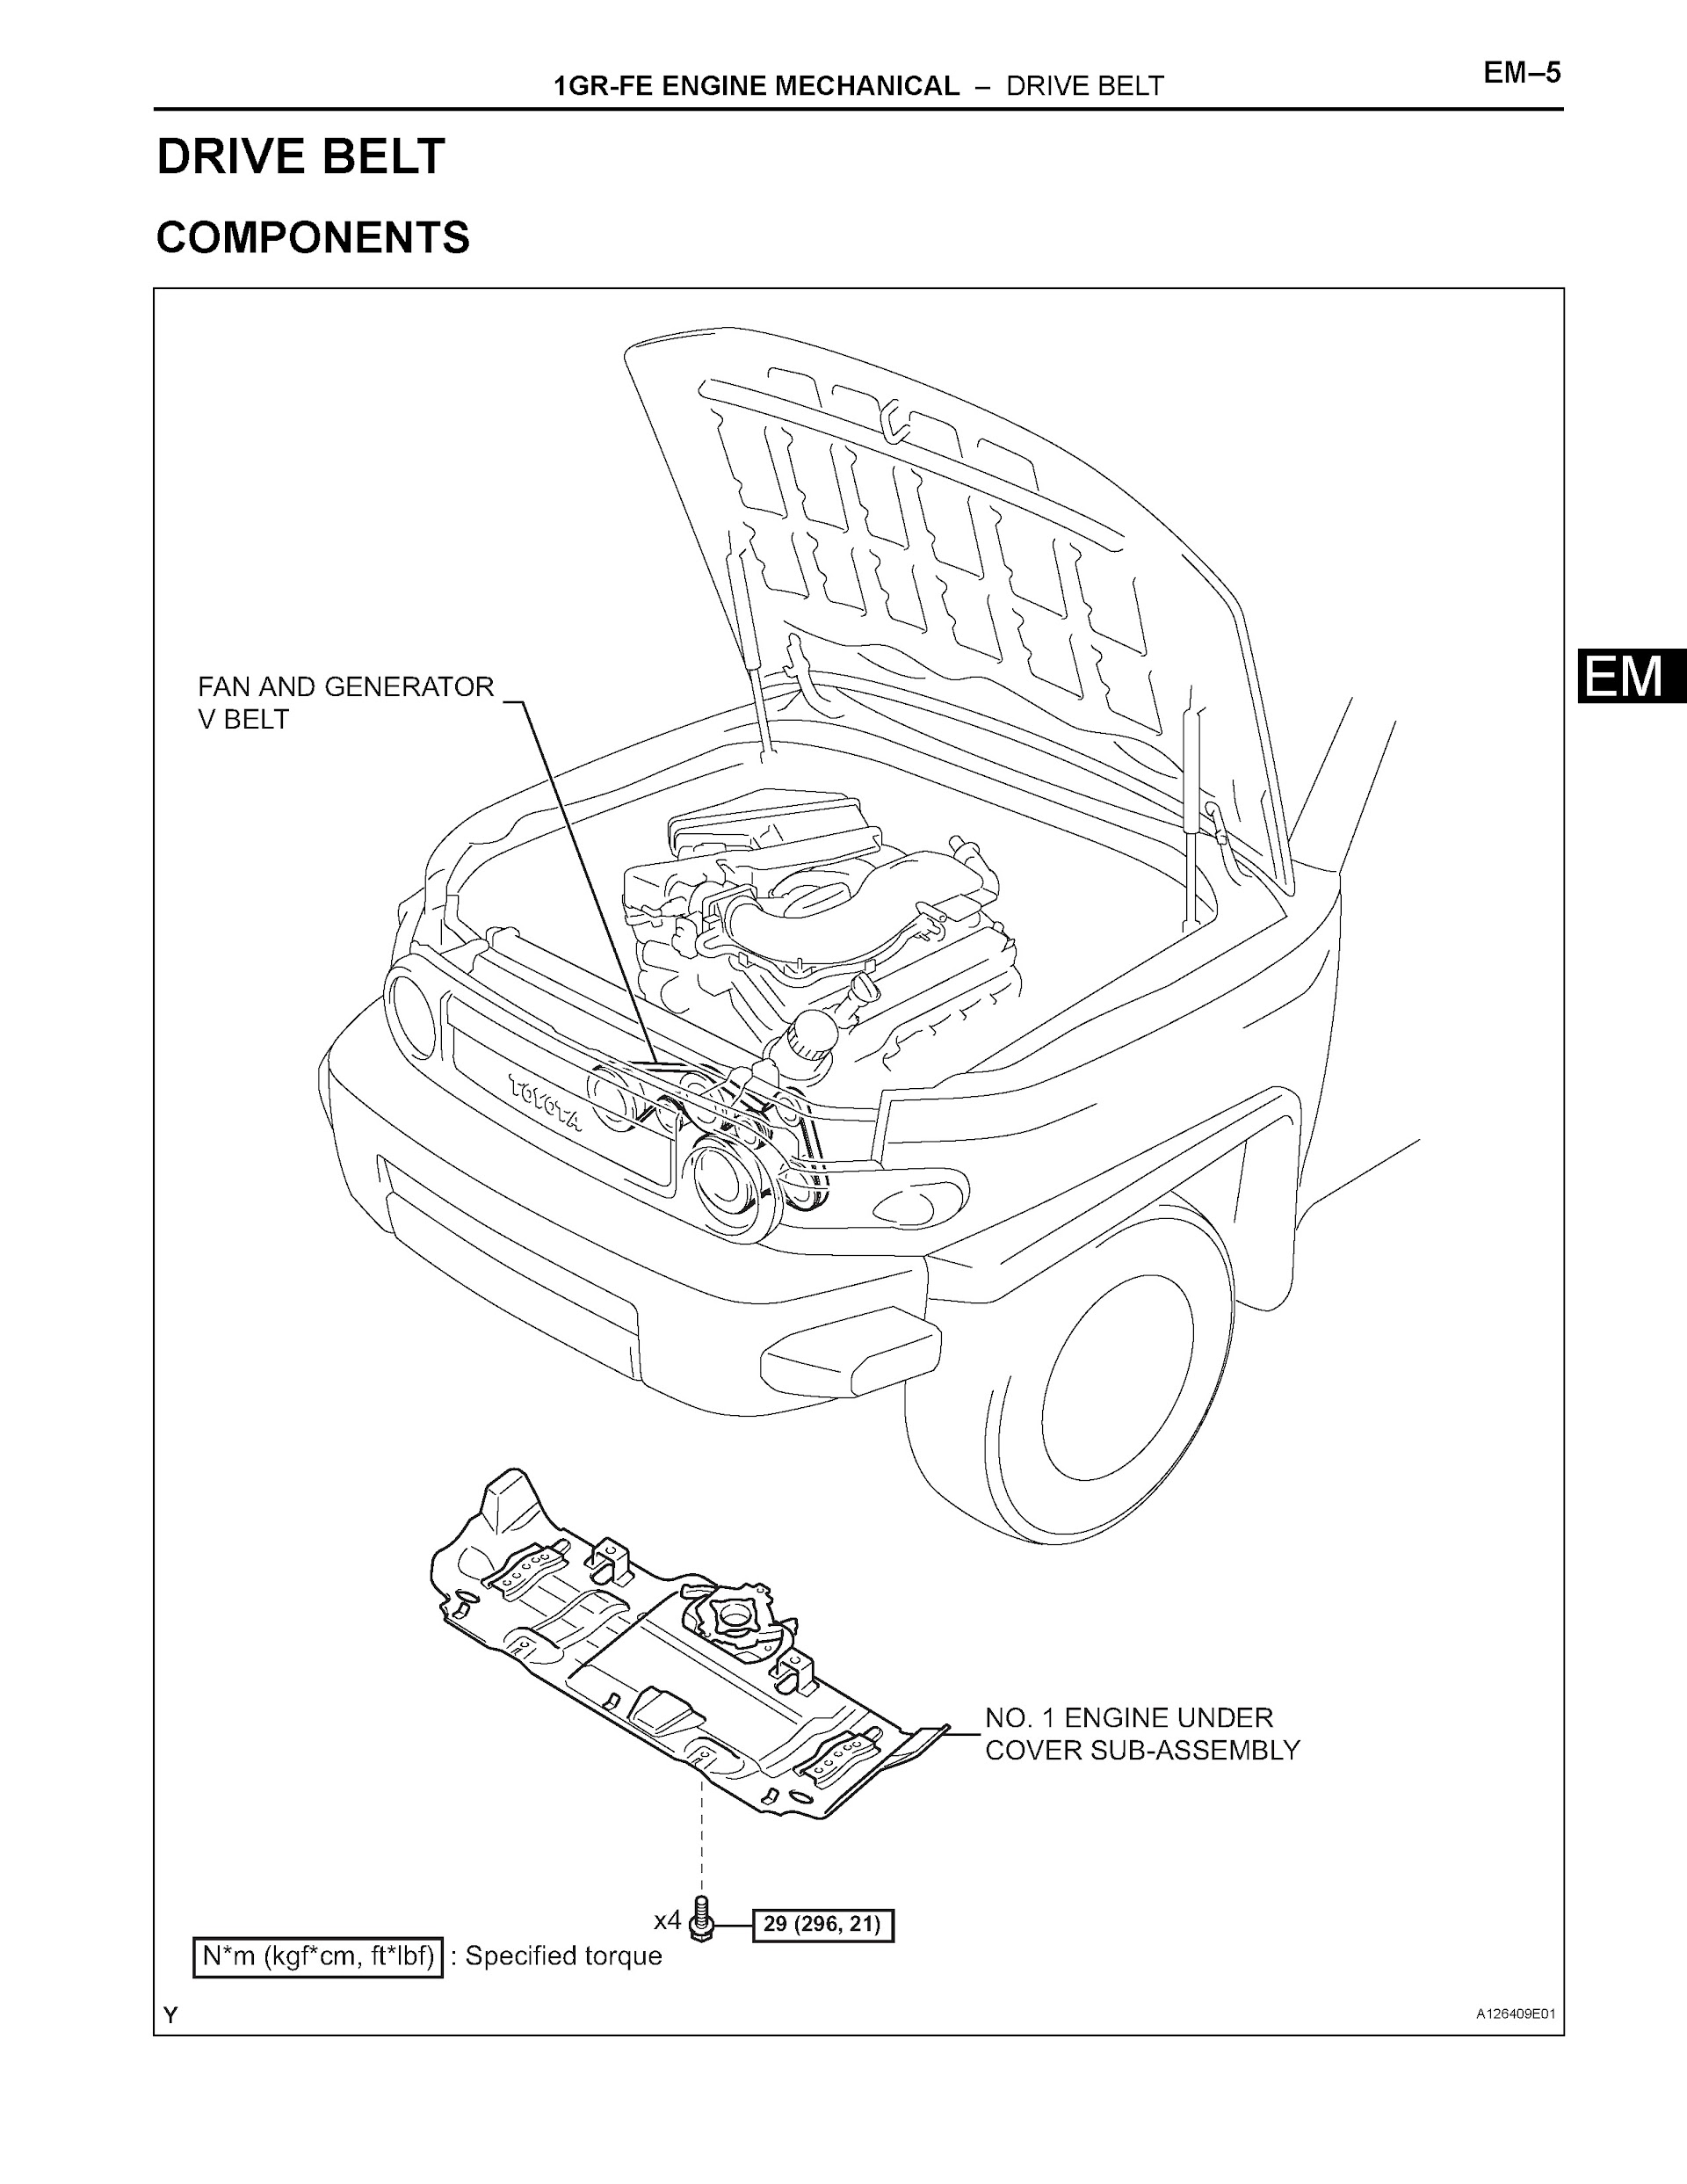 Toyota FJ Cruiser Repair Manual, Drive Belt Components